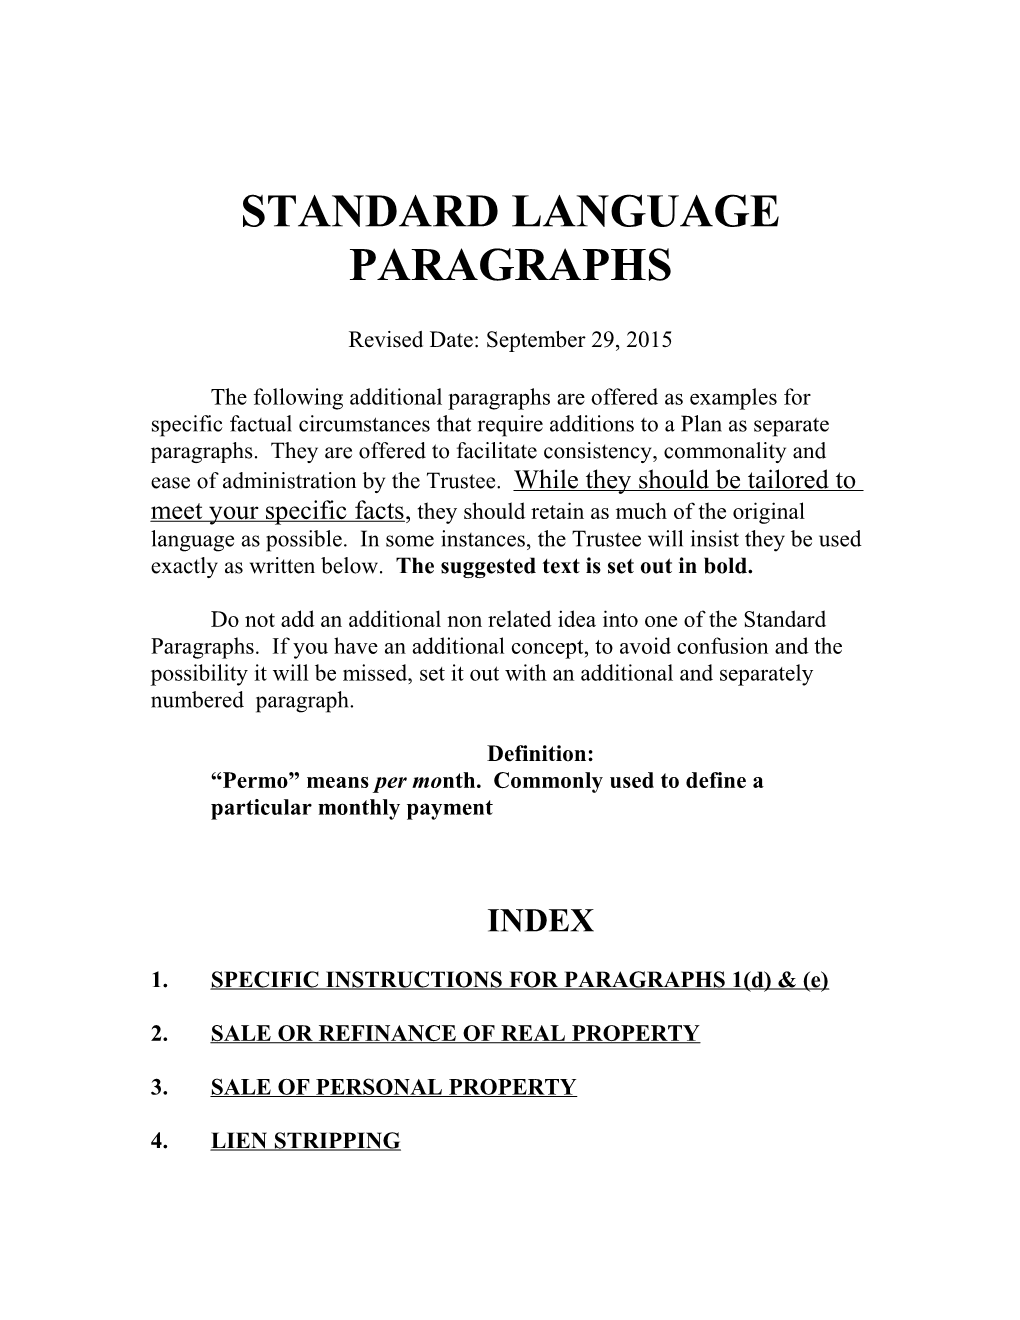 STANDARD LANGUAGE Paragraphs for Post